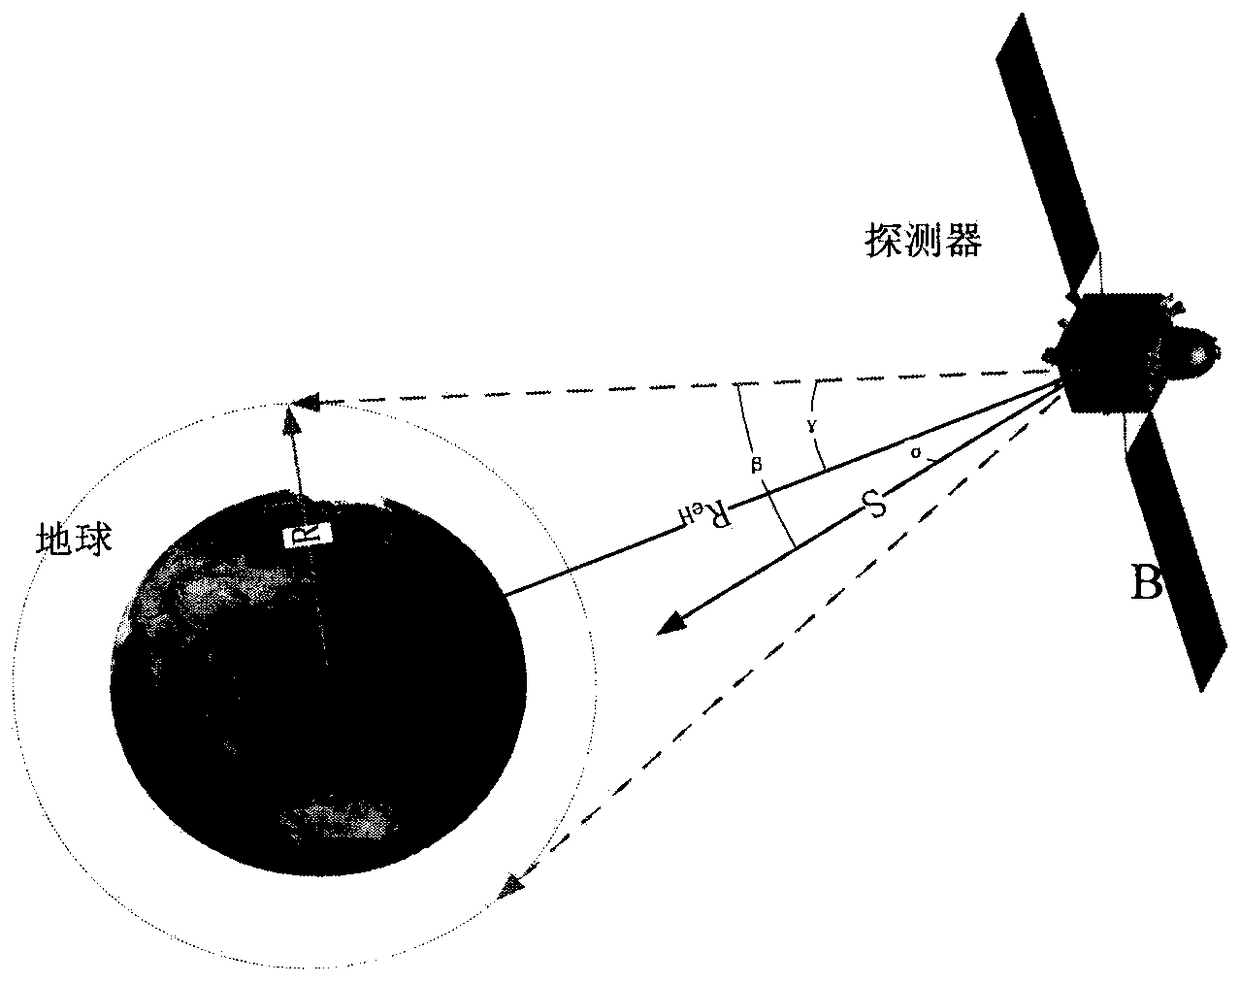 A positioning on-orbit test verification method based on navigation satellite leakage signals